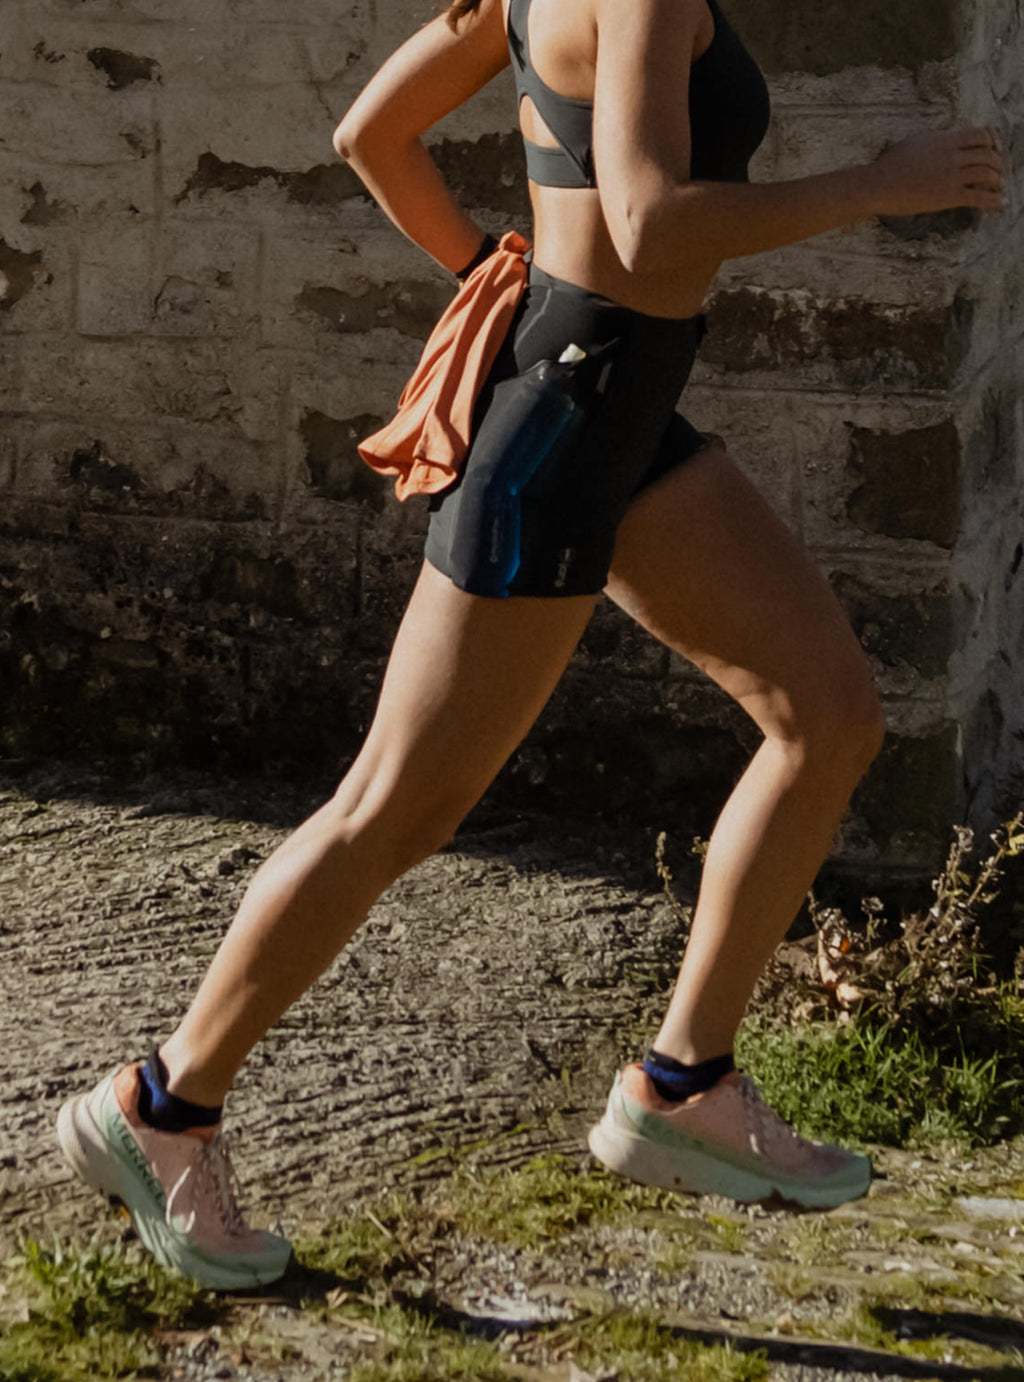 Janji — Exploring, Connecting & Giving Back Through Running